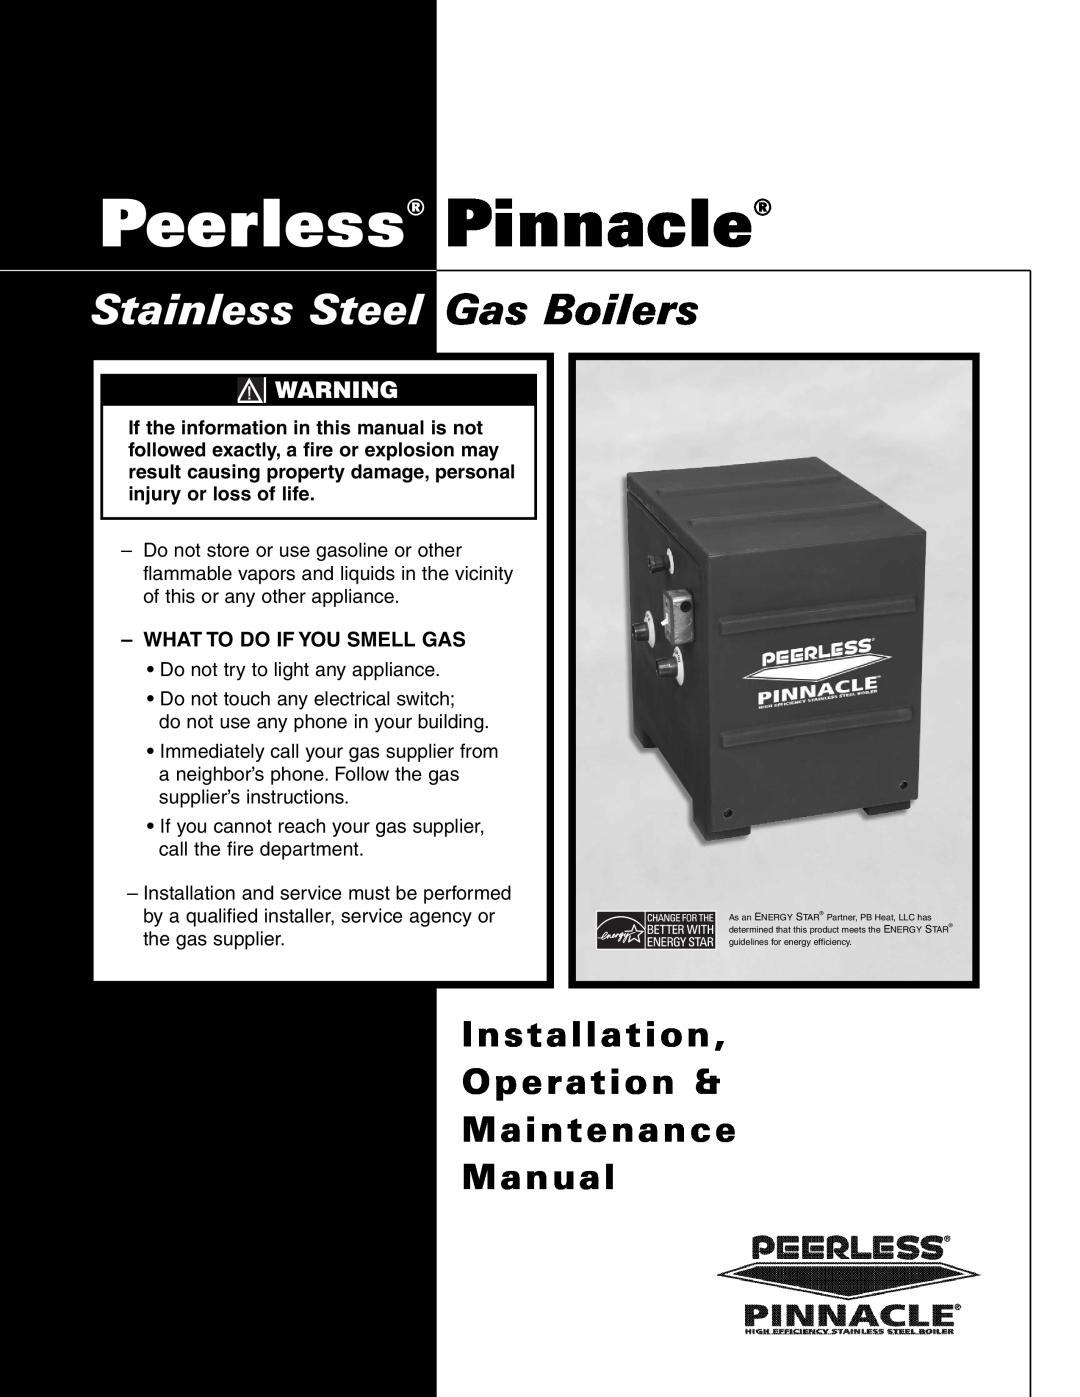 PB Heat manual Installation Operation & Maintenance Manual, Peerless Pinnacle, Stainless Steel Gas Boilers 